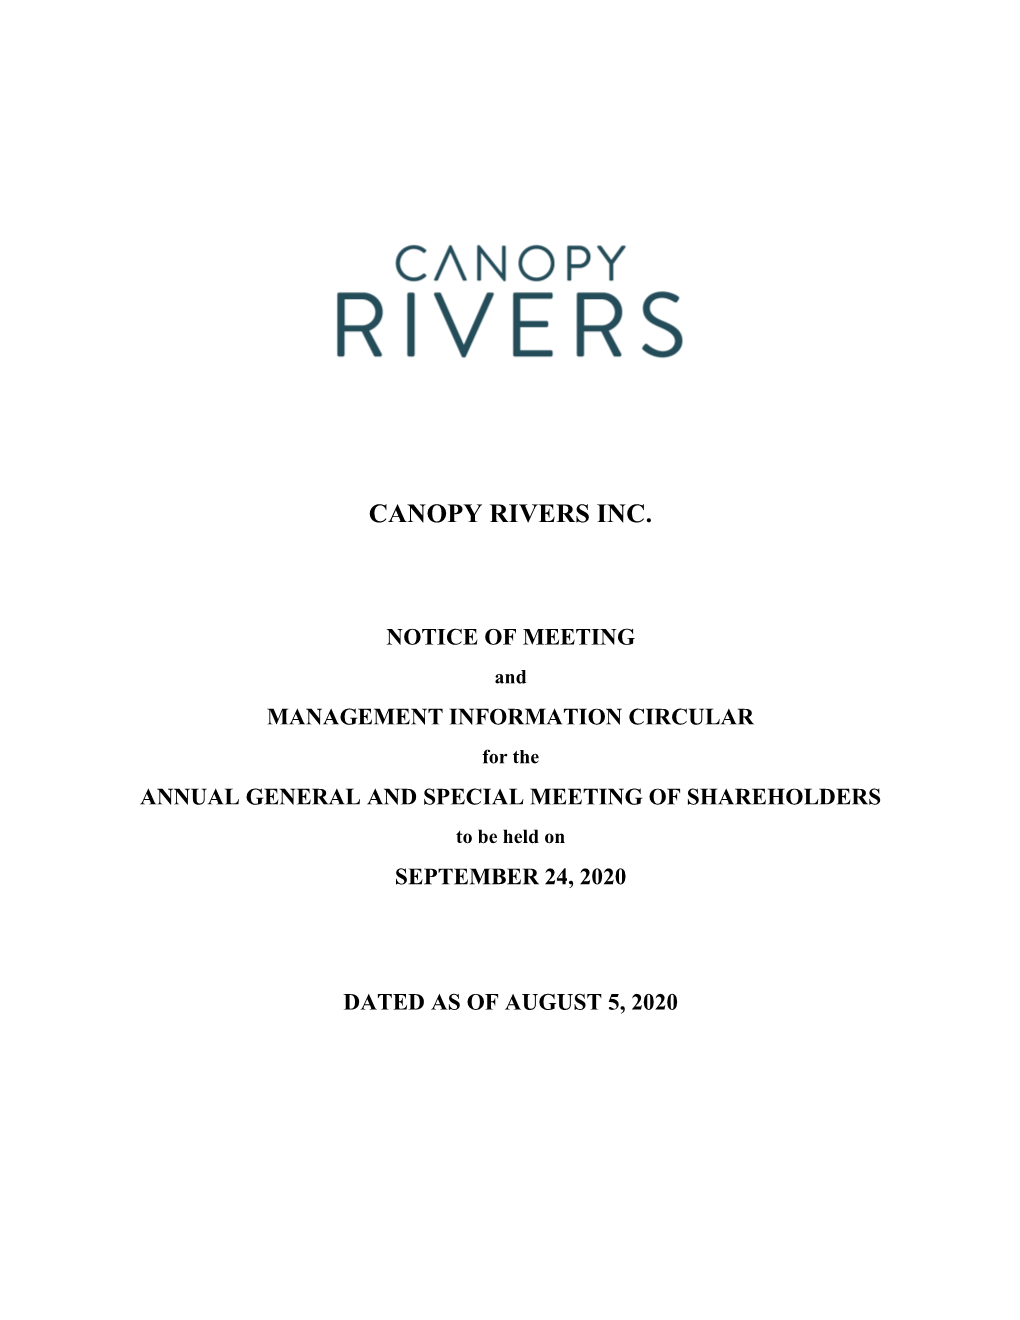 Canopy Rivers Inc